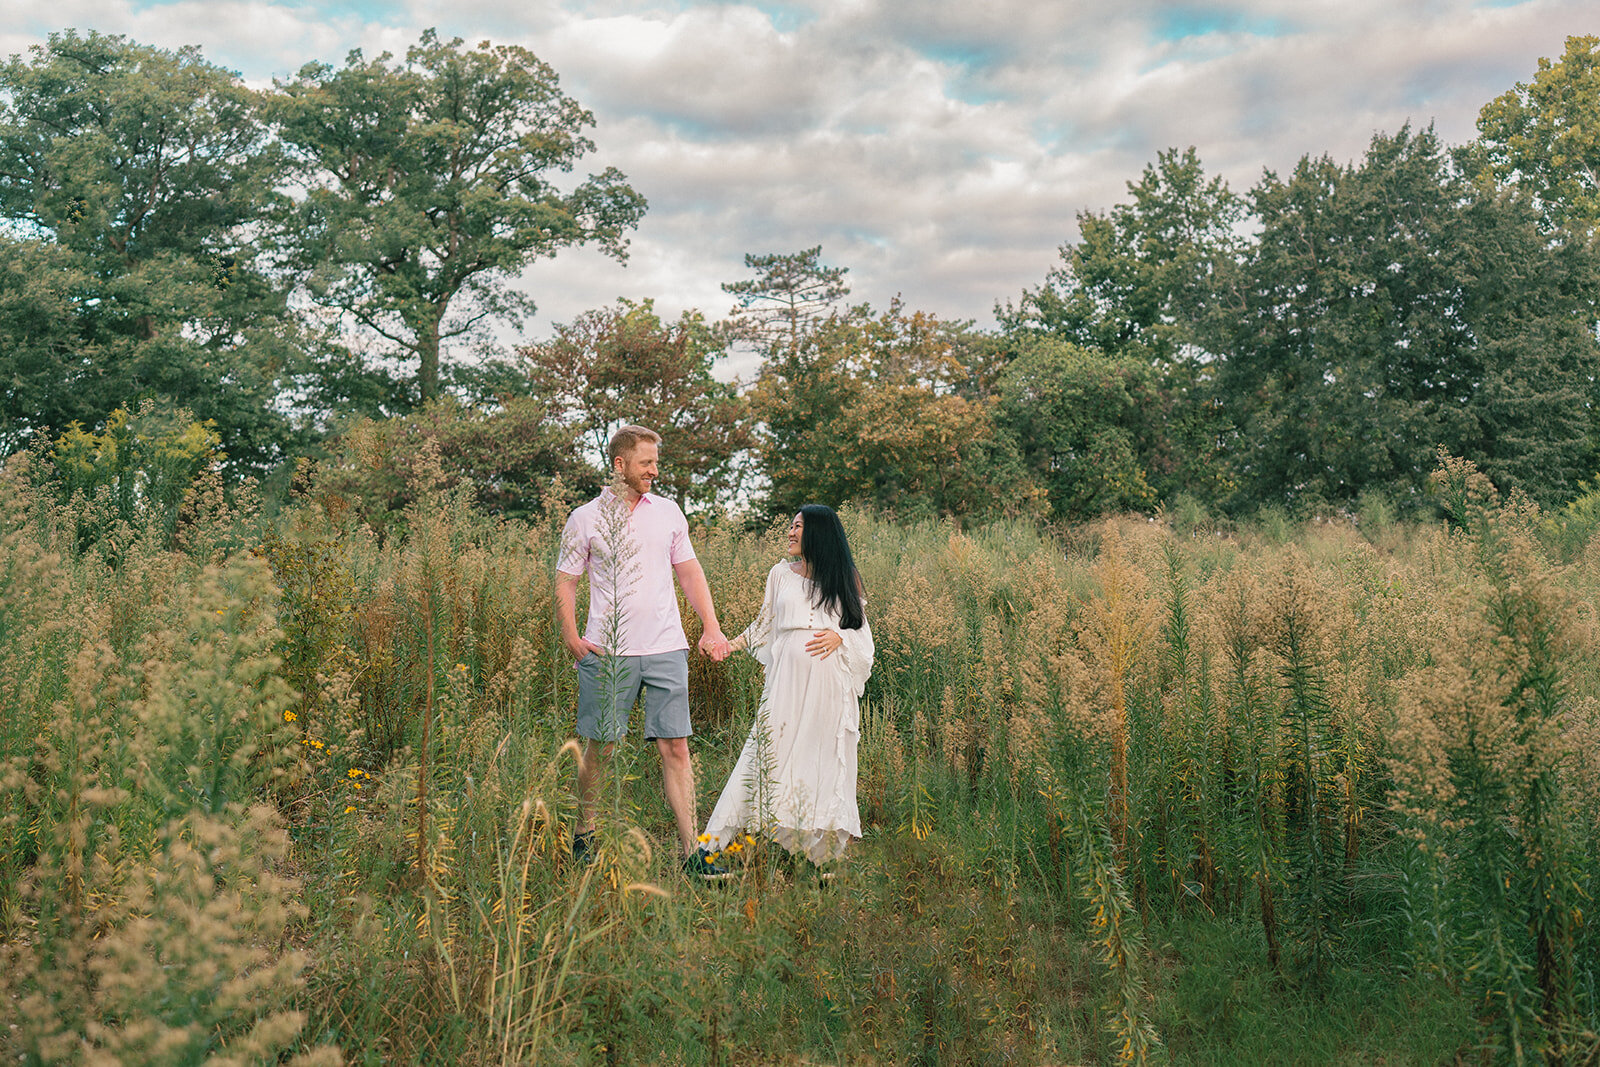 st-louis-couple walking through a field